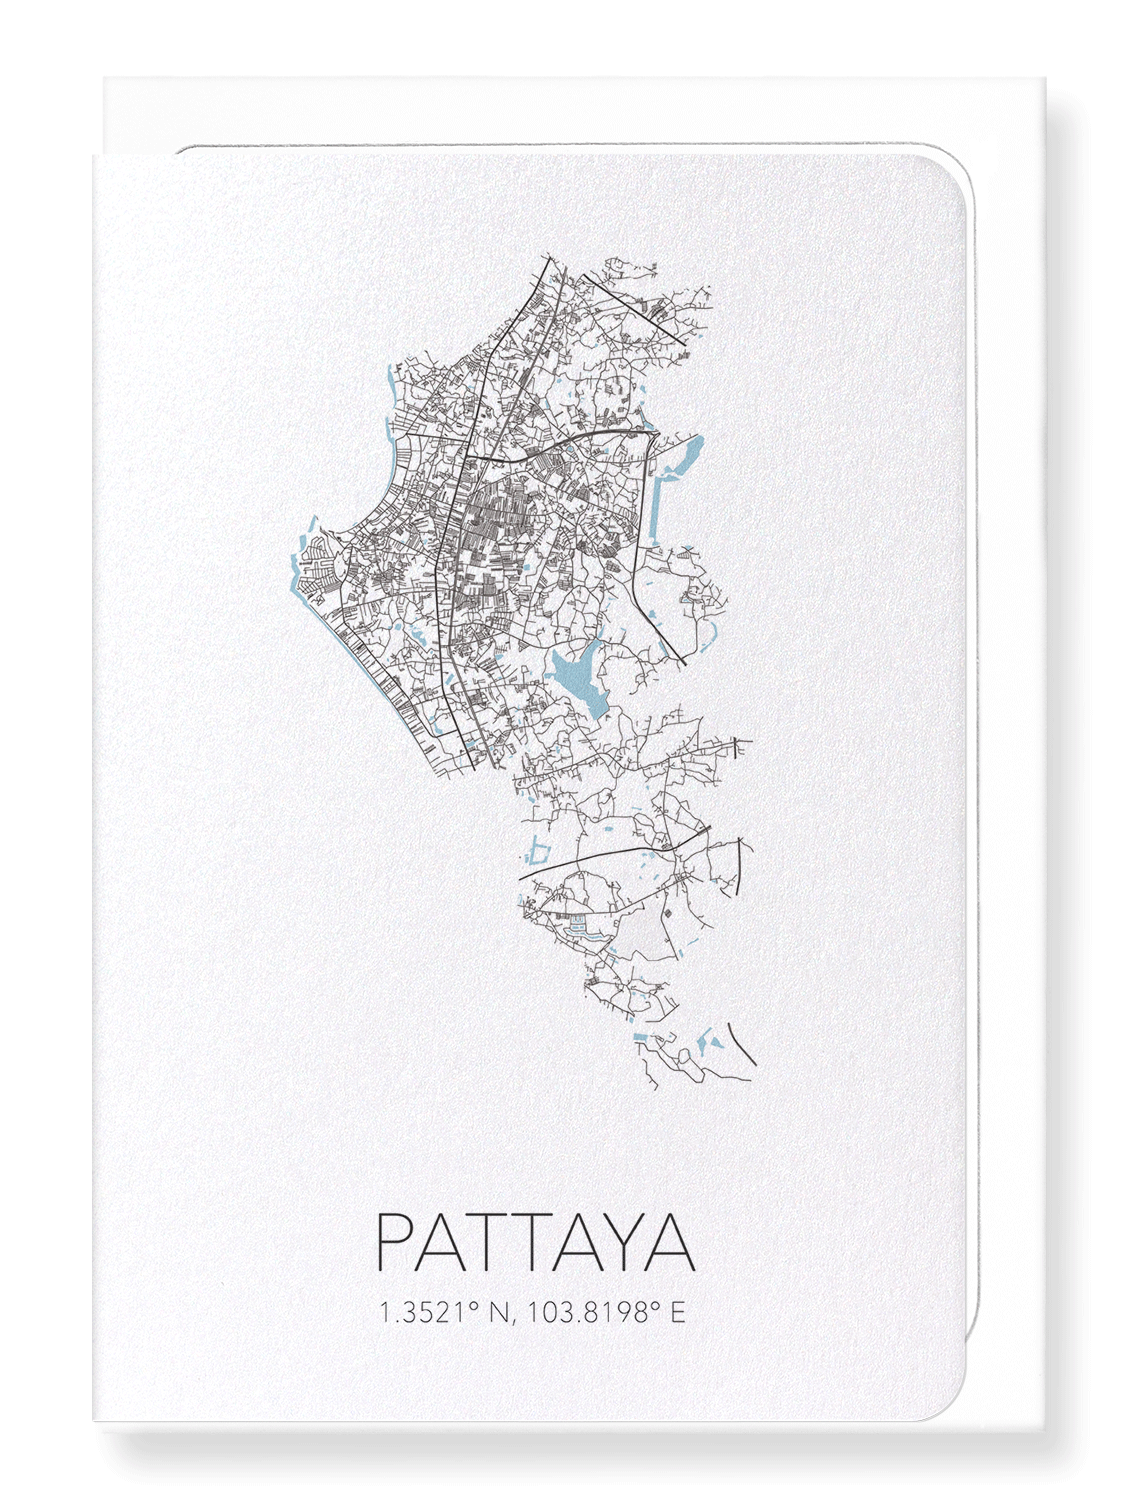 PATTAYA CUTOUT: Map Cutout Greeting Card